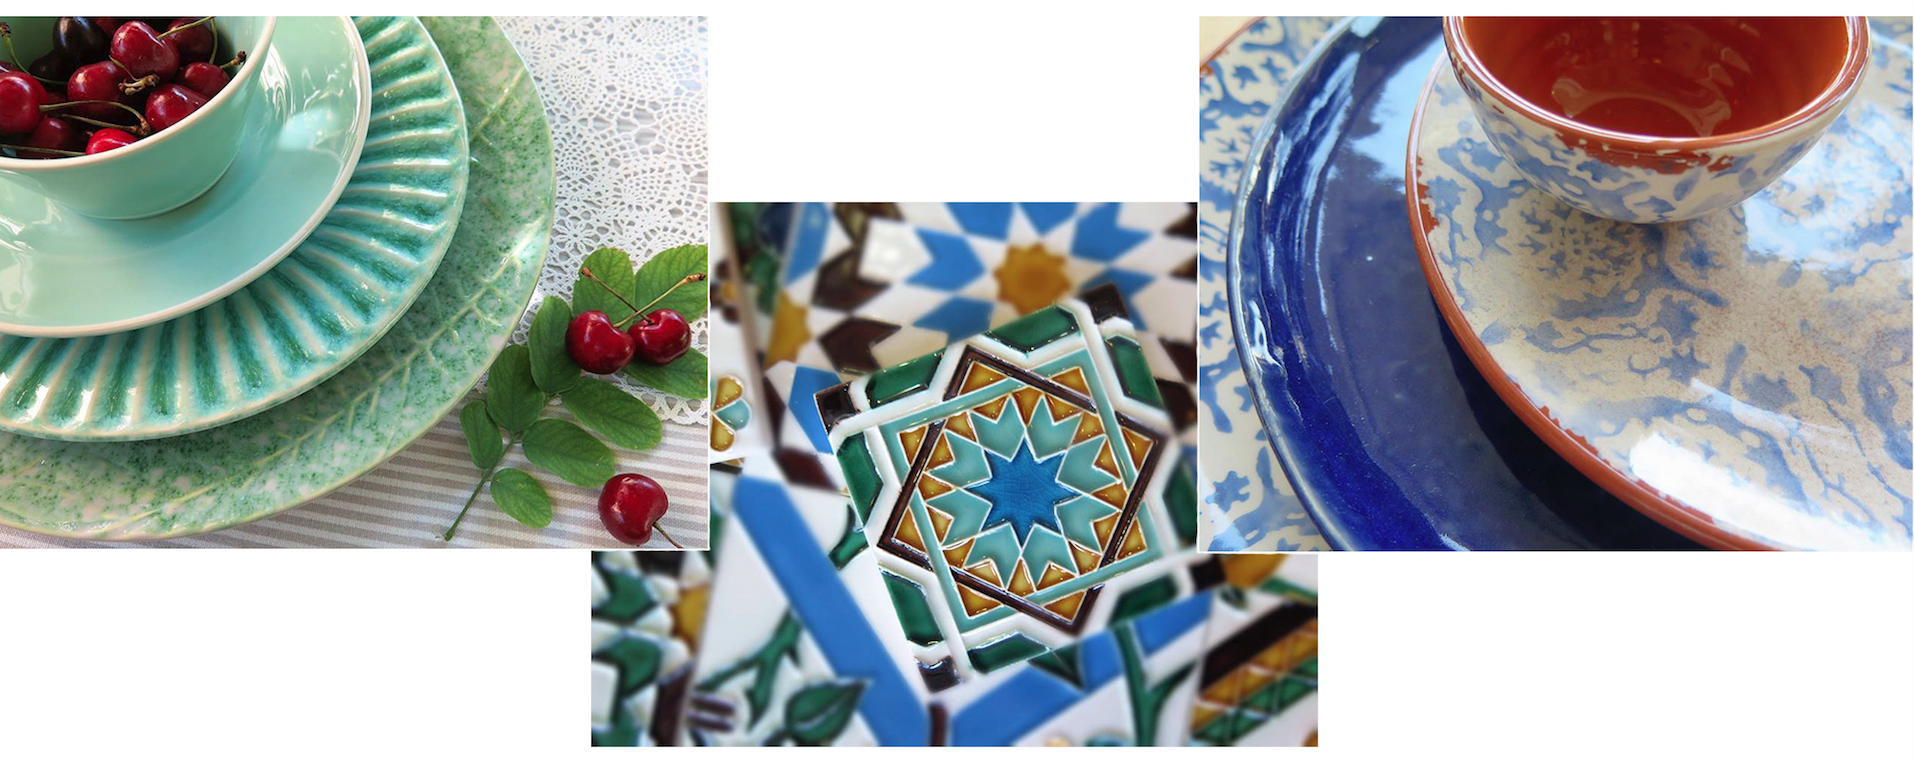 Cerâmica em Portugal